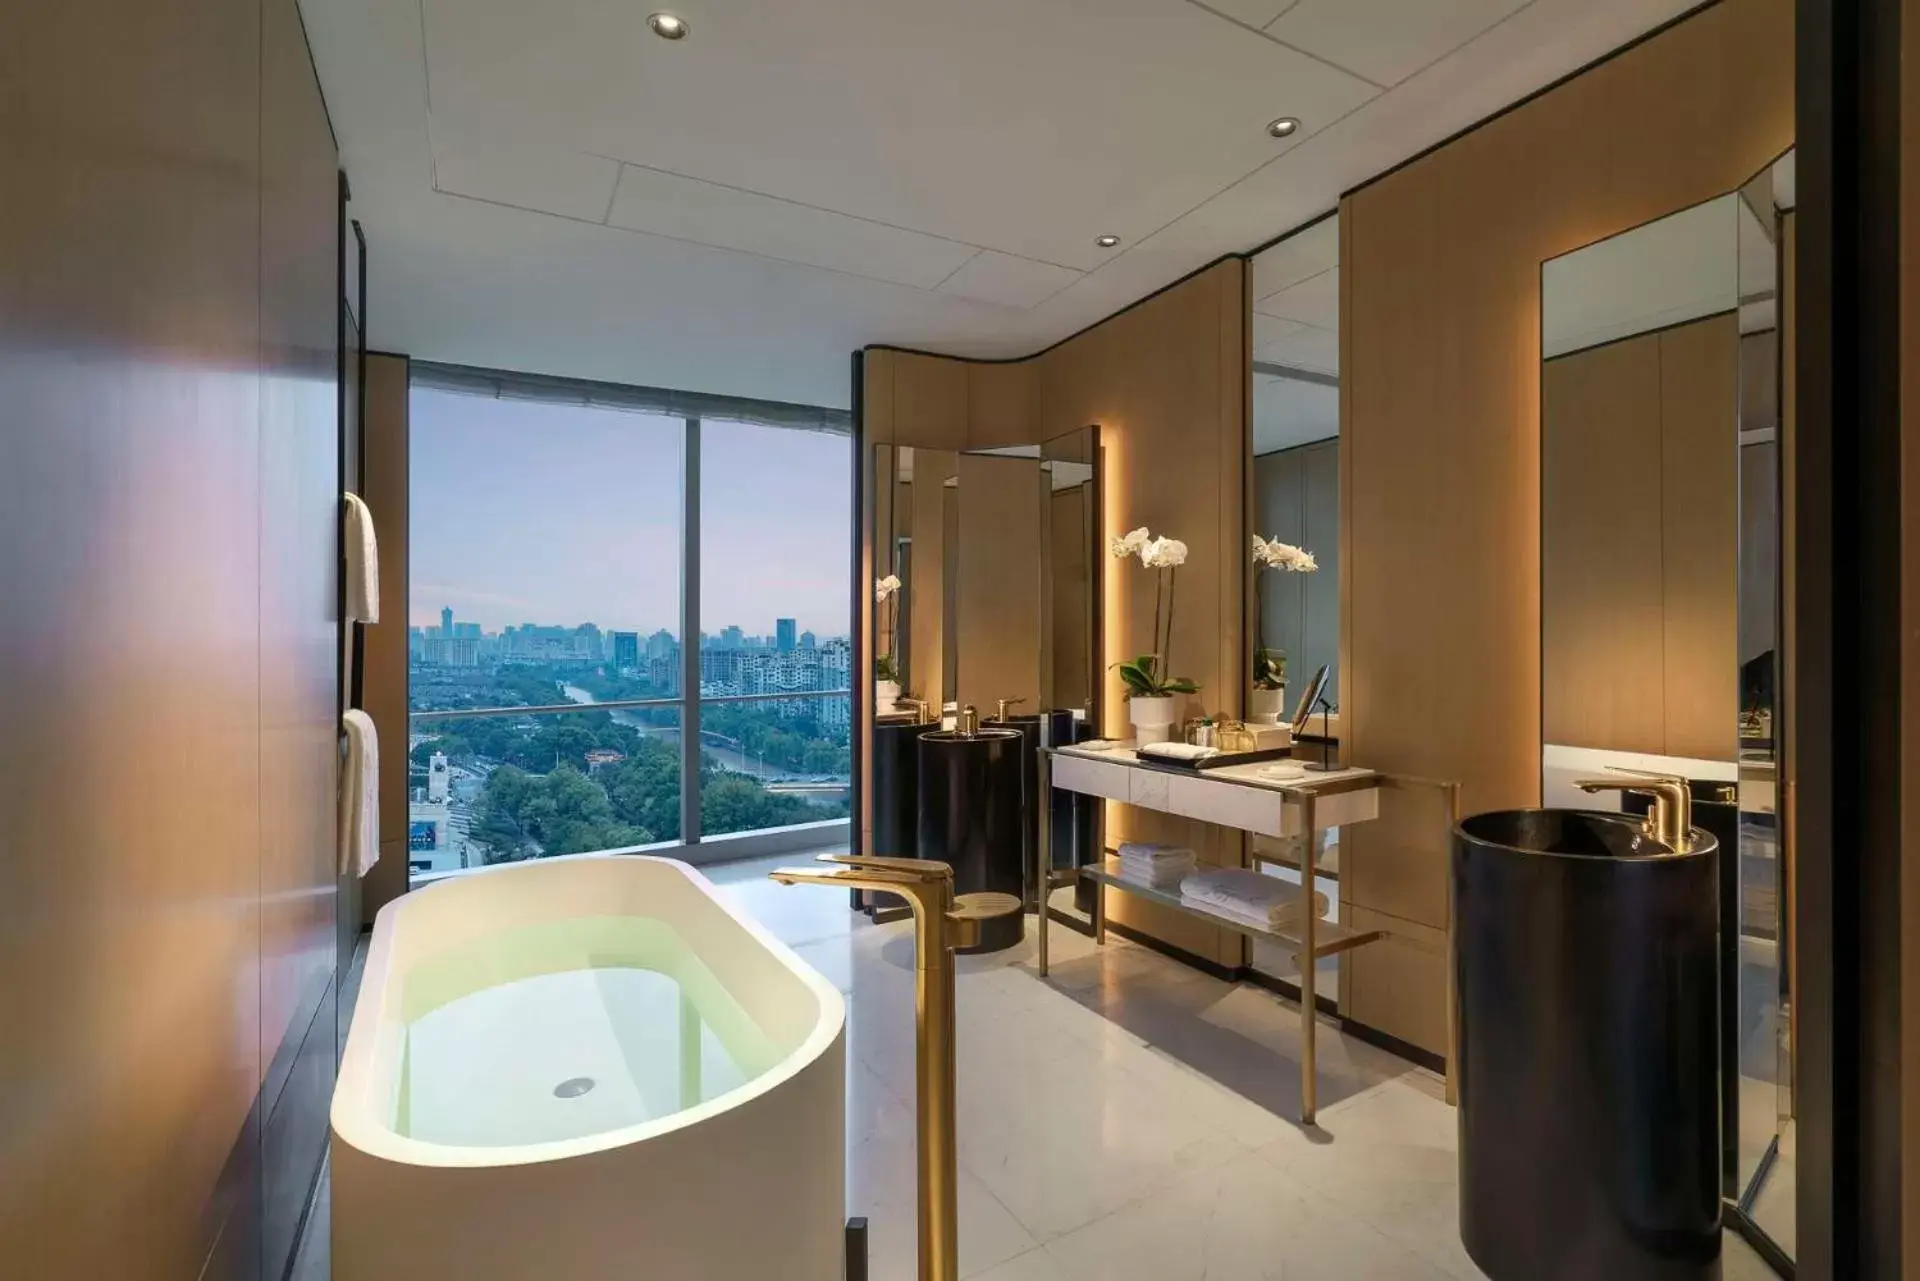 Photo of the whole room, Bathroom in Kempinski Hotel Hangzhou